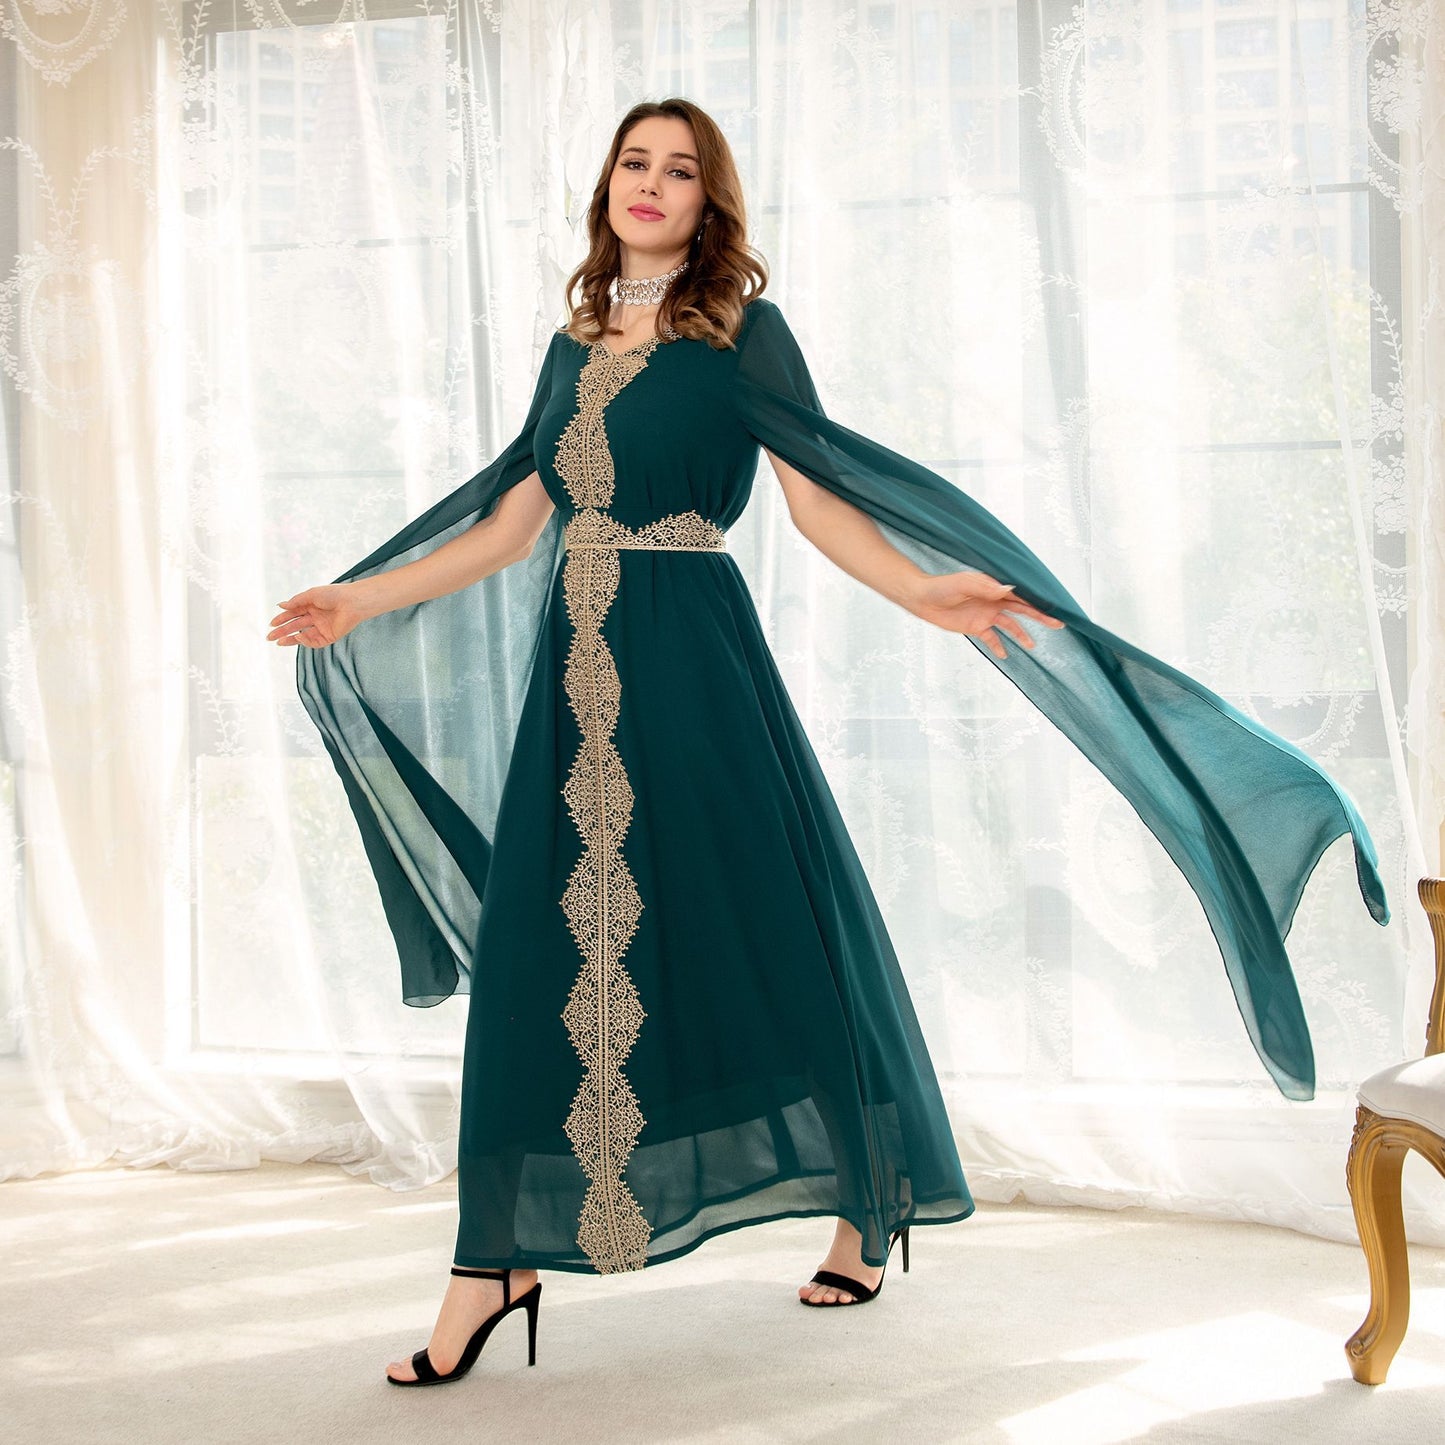 Cape Sleeve Lace Chiffon Dubai Arab Batwing Sleeve Dress